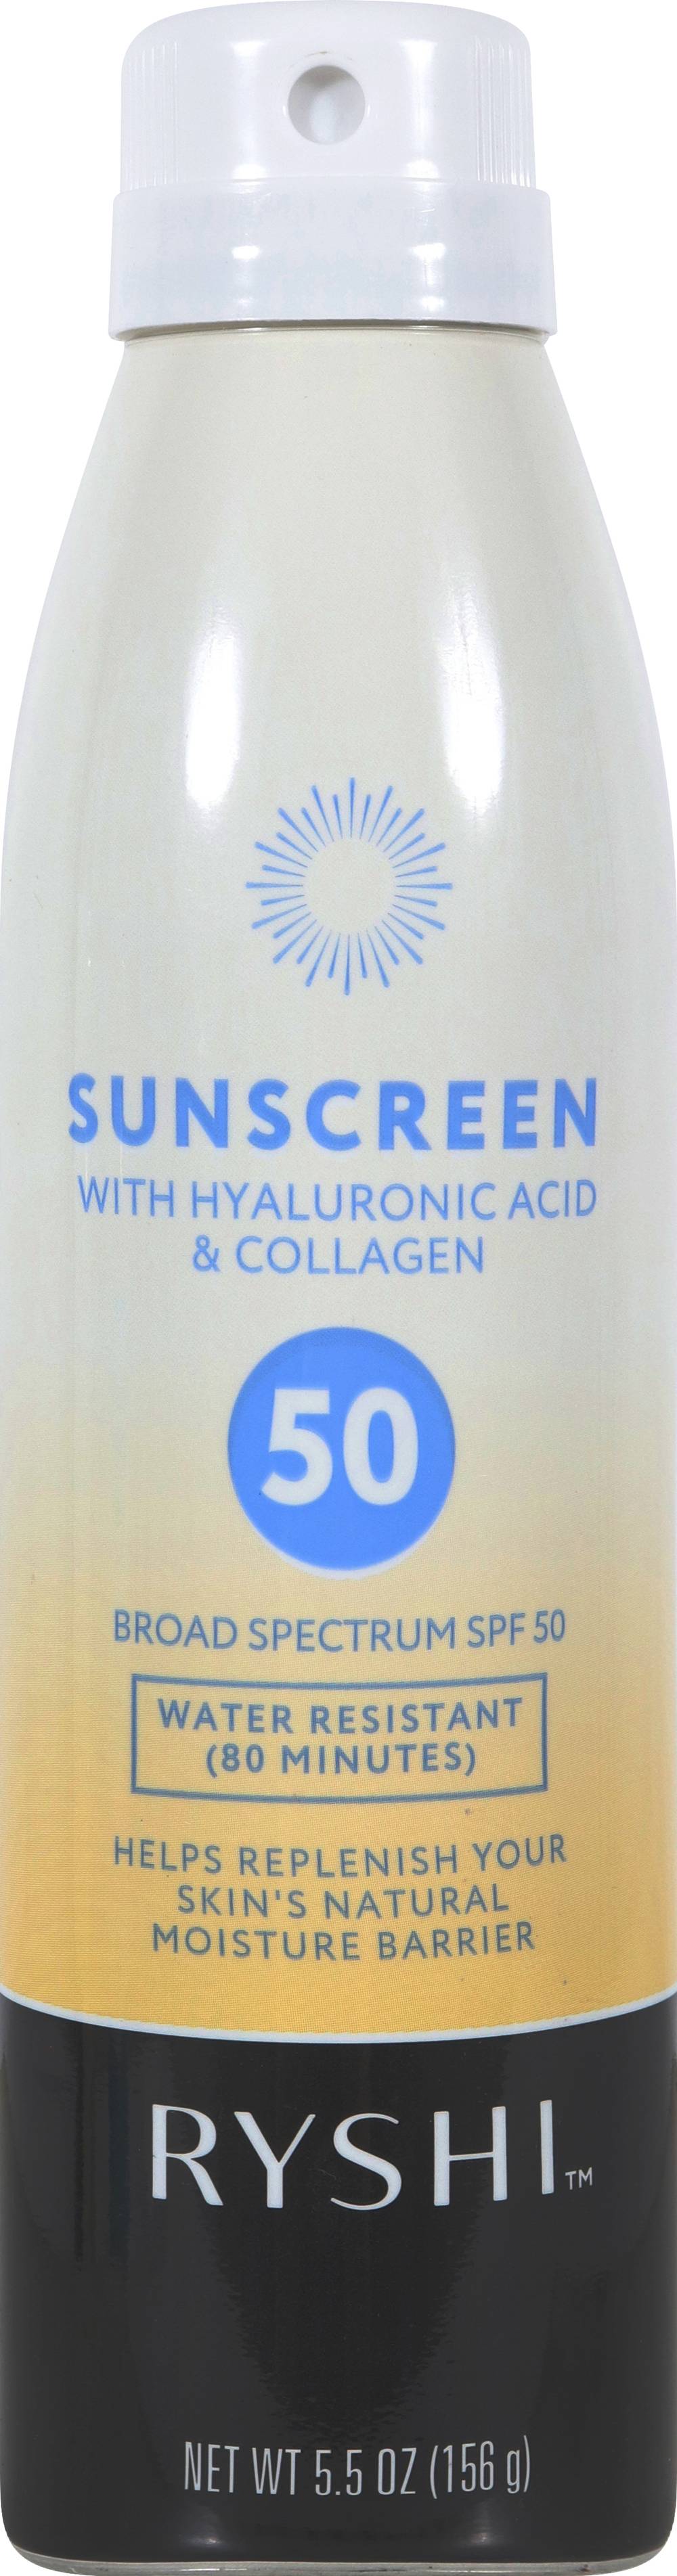 Ryshi Sunscreen Spray W/ Hyaluronic Acid & Collagen - SPF50, 5.5 oz